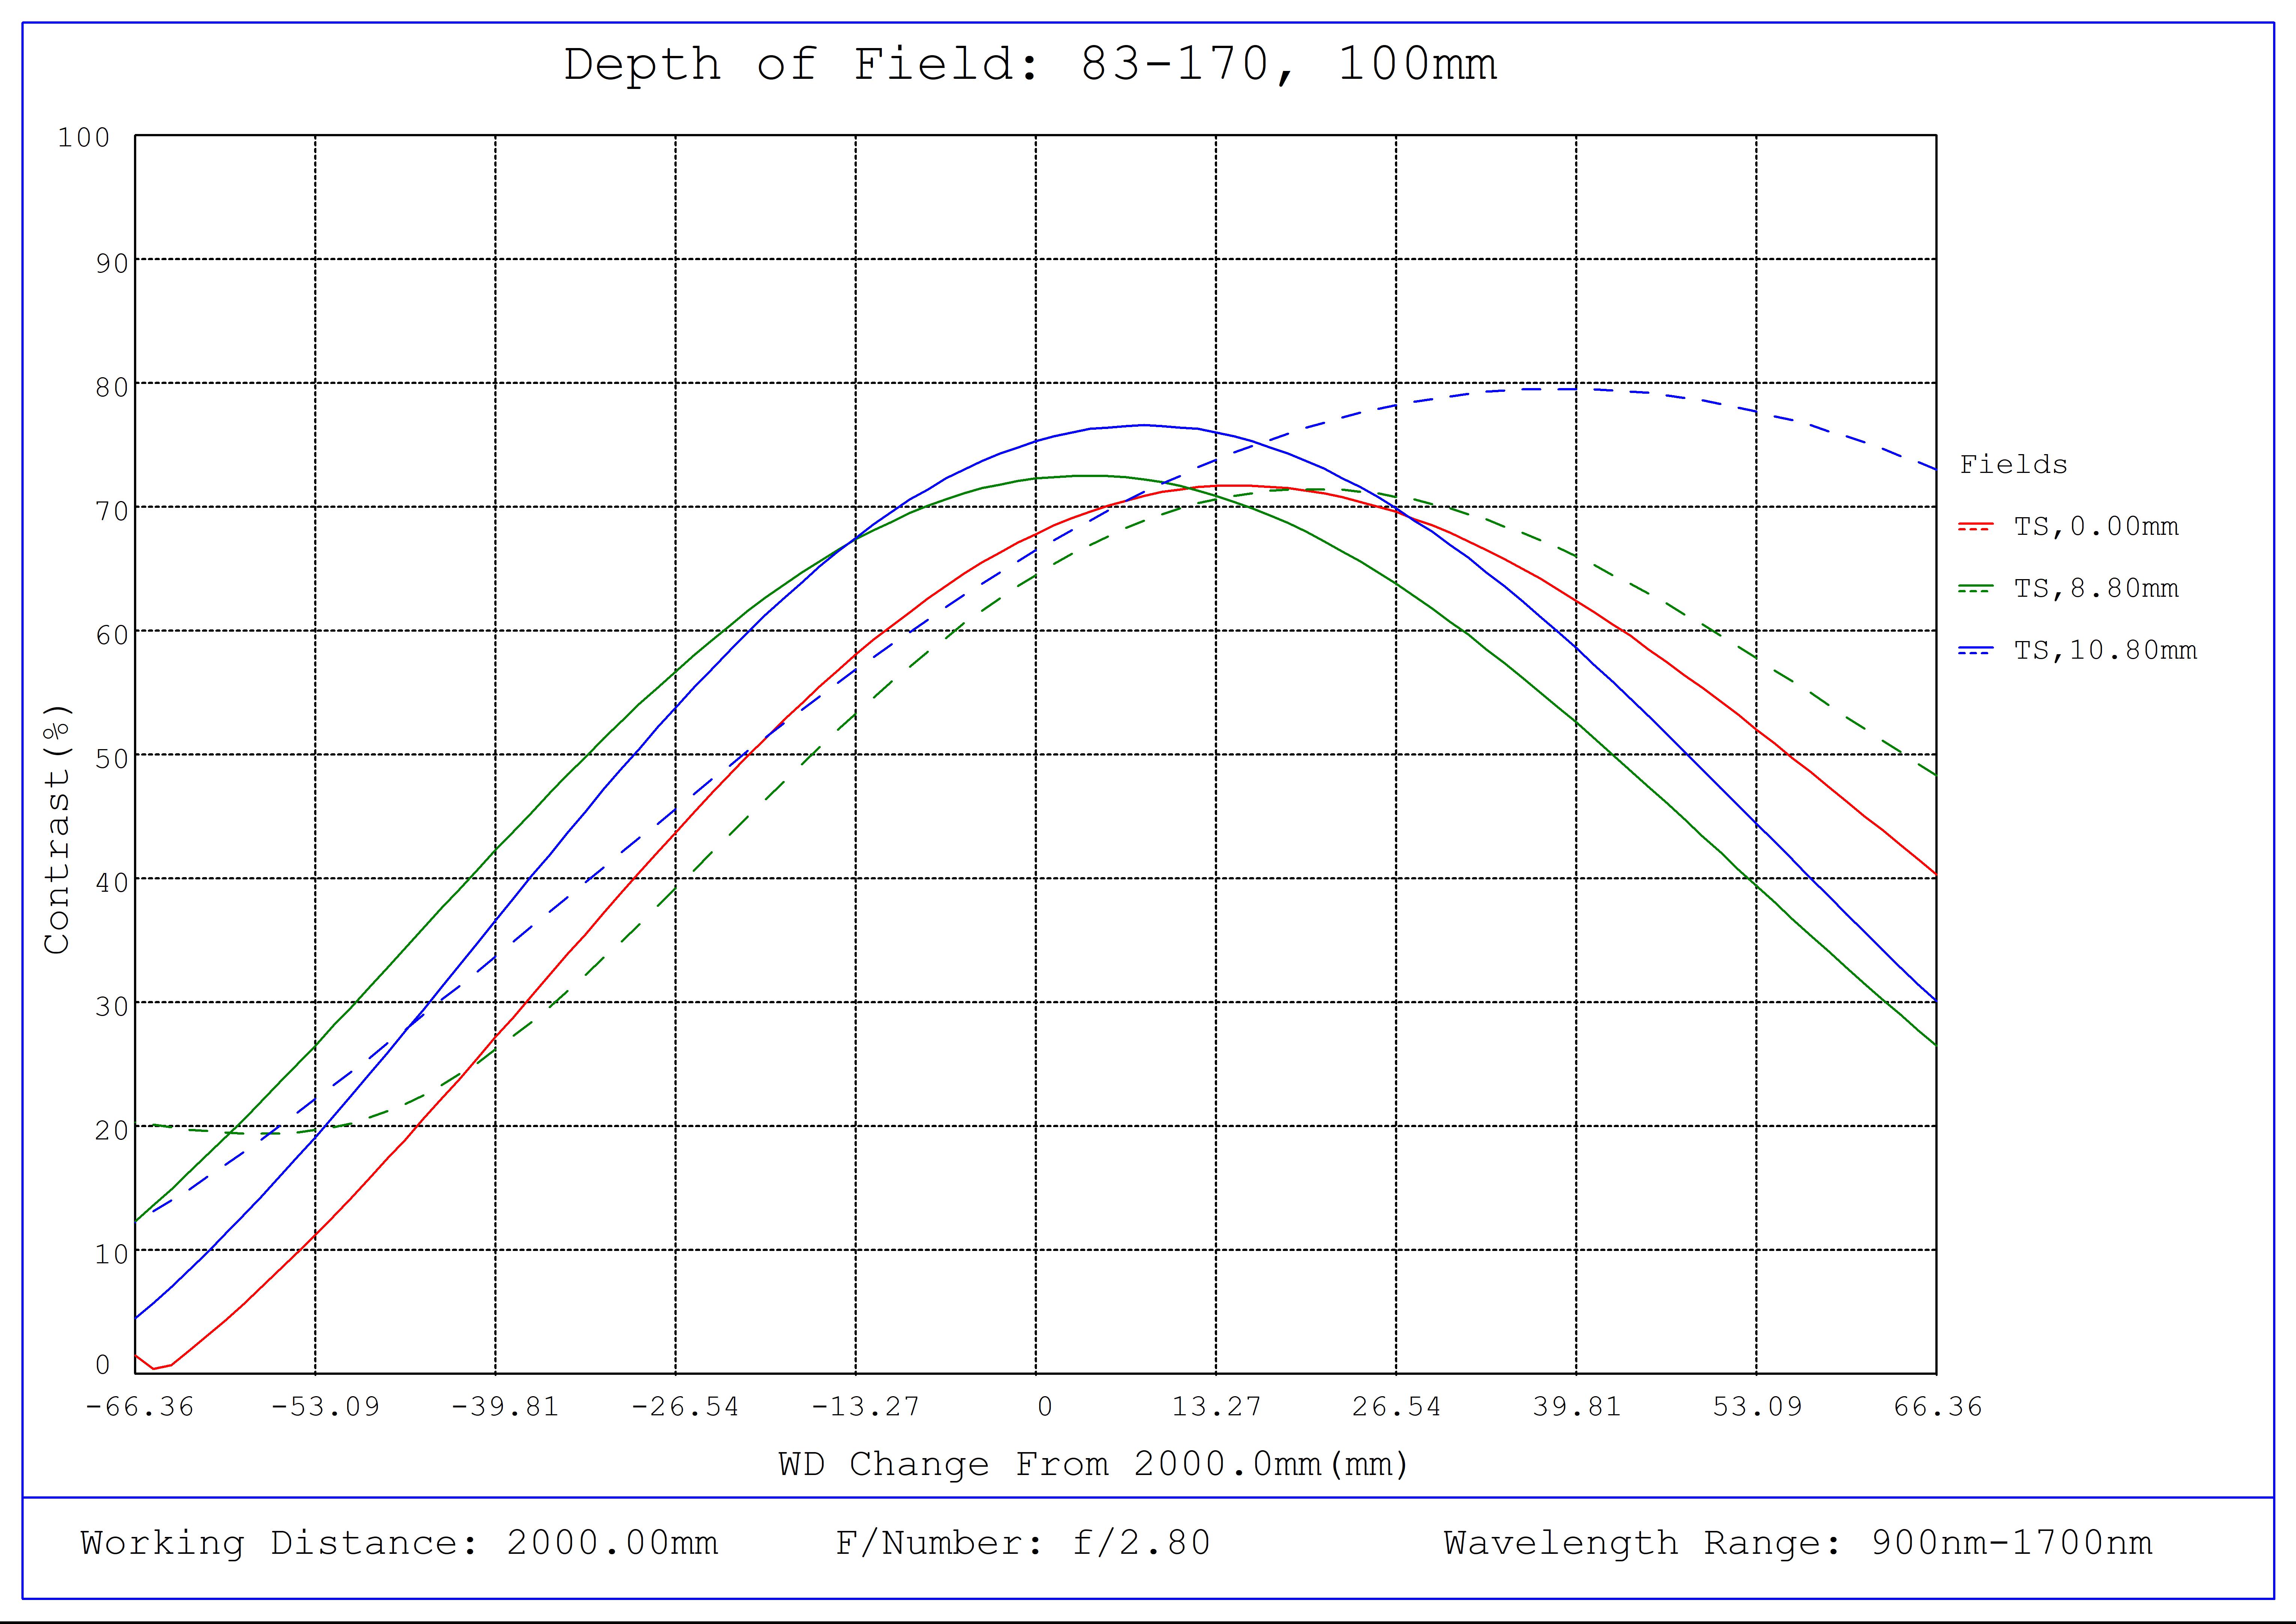 #83-170, 100mm SWIR Series Fixed Focal Length Lens, C-Mount, Depth of Field Plot, 2000mm Working Distance, f2.8